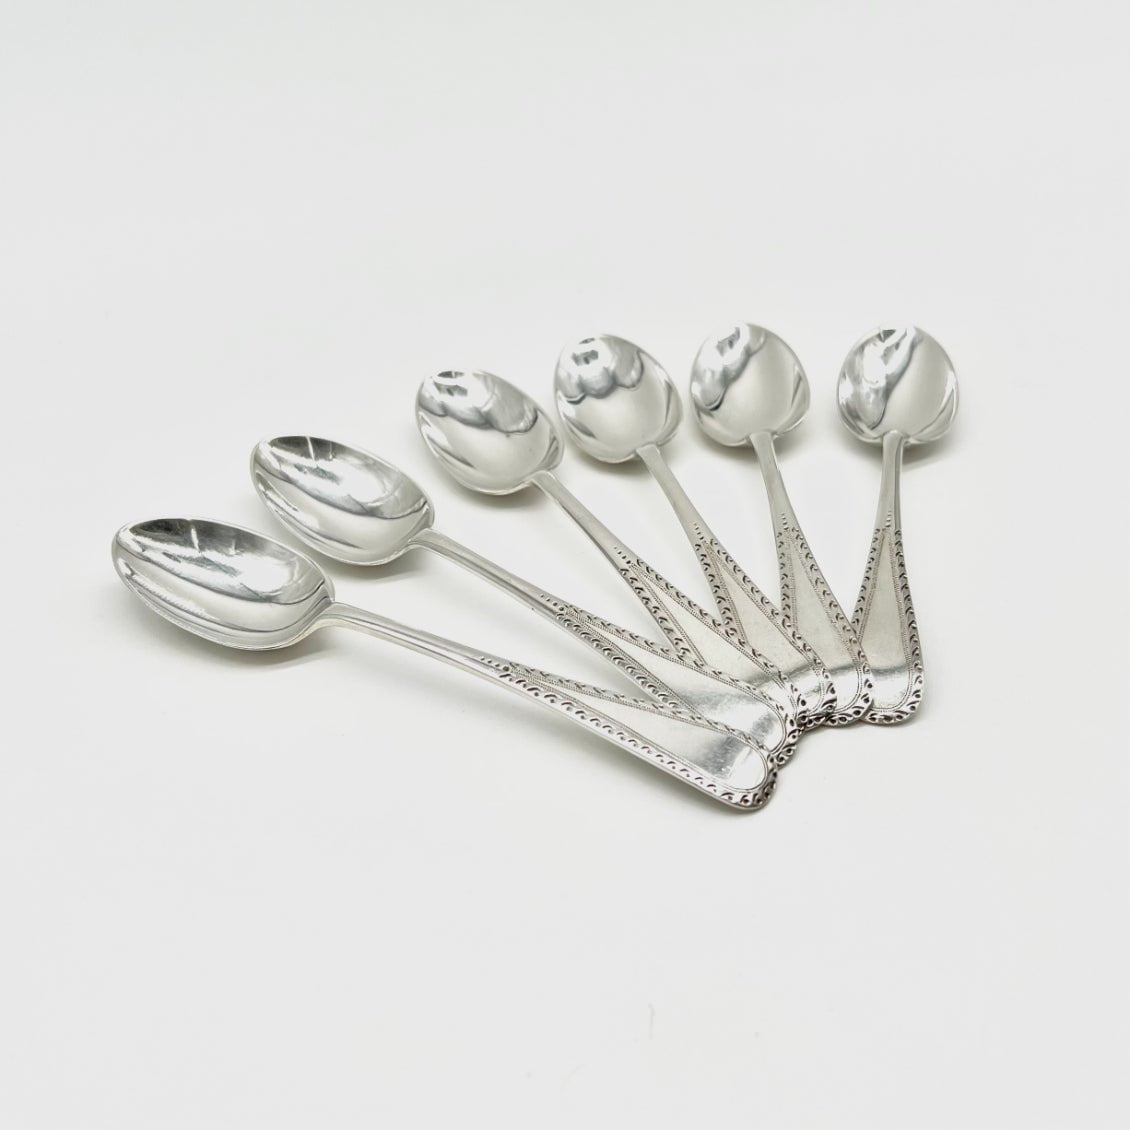 Nil Meglior Engraved Silver Tea Spoons